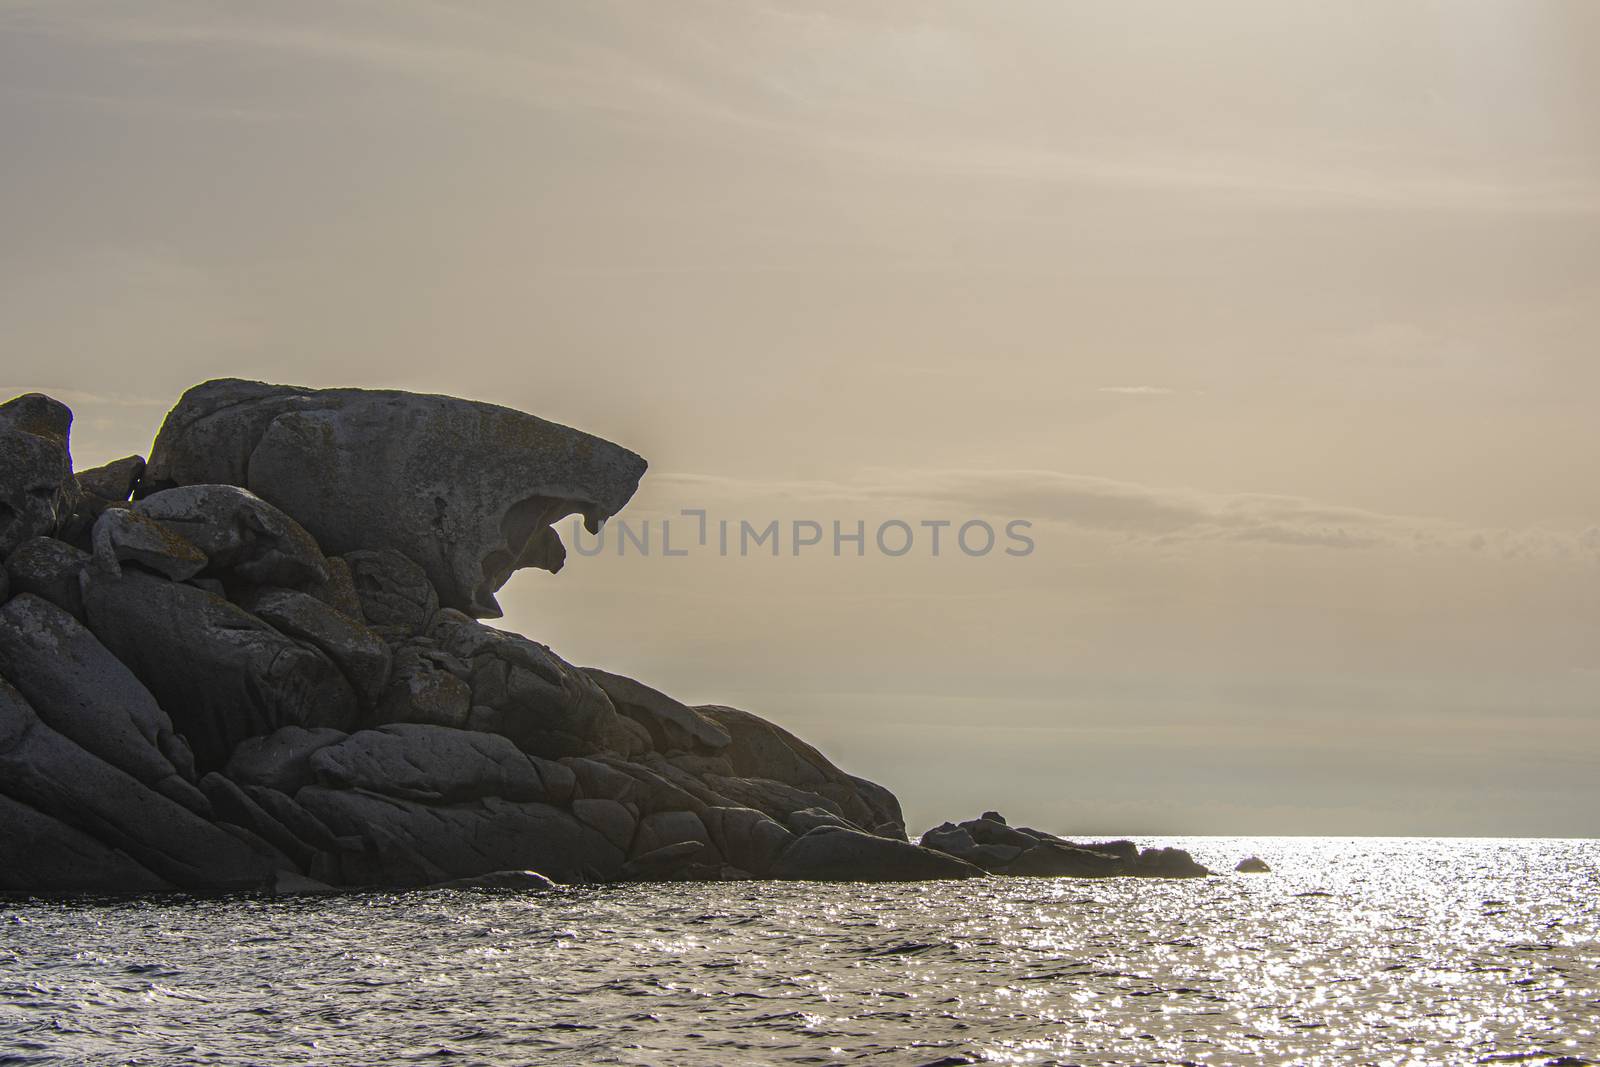 Villasimius coastline landscape in Sardinia Italy during a sunny day